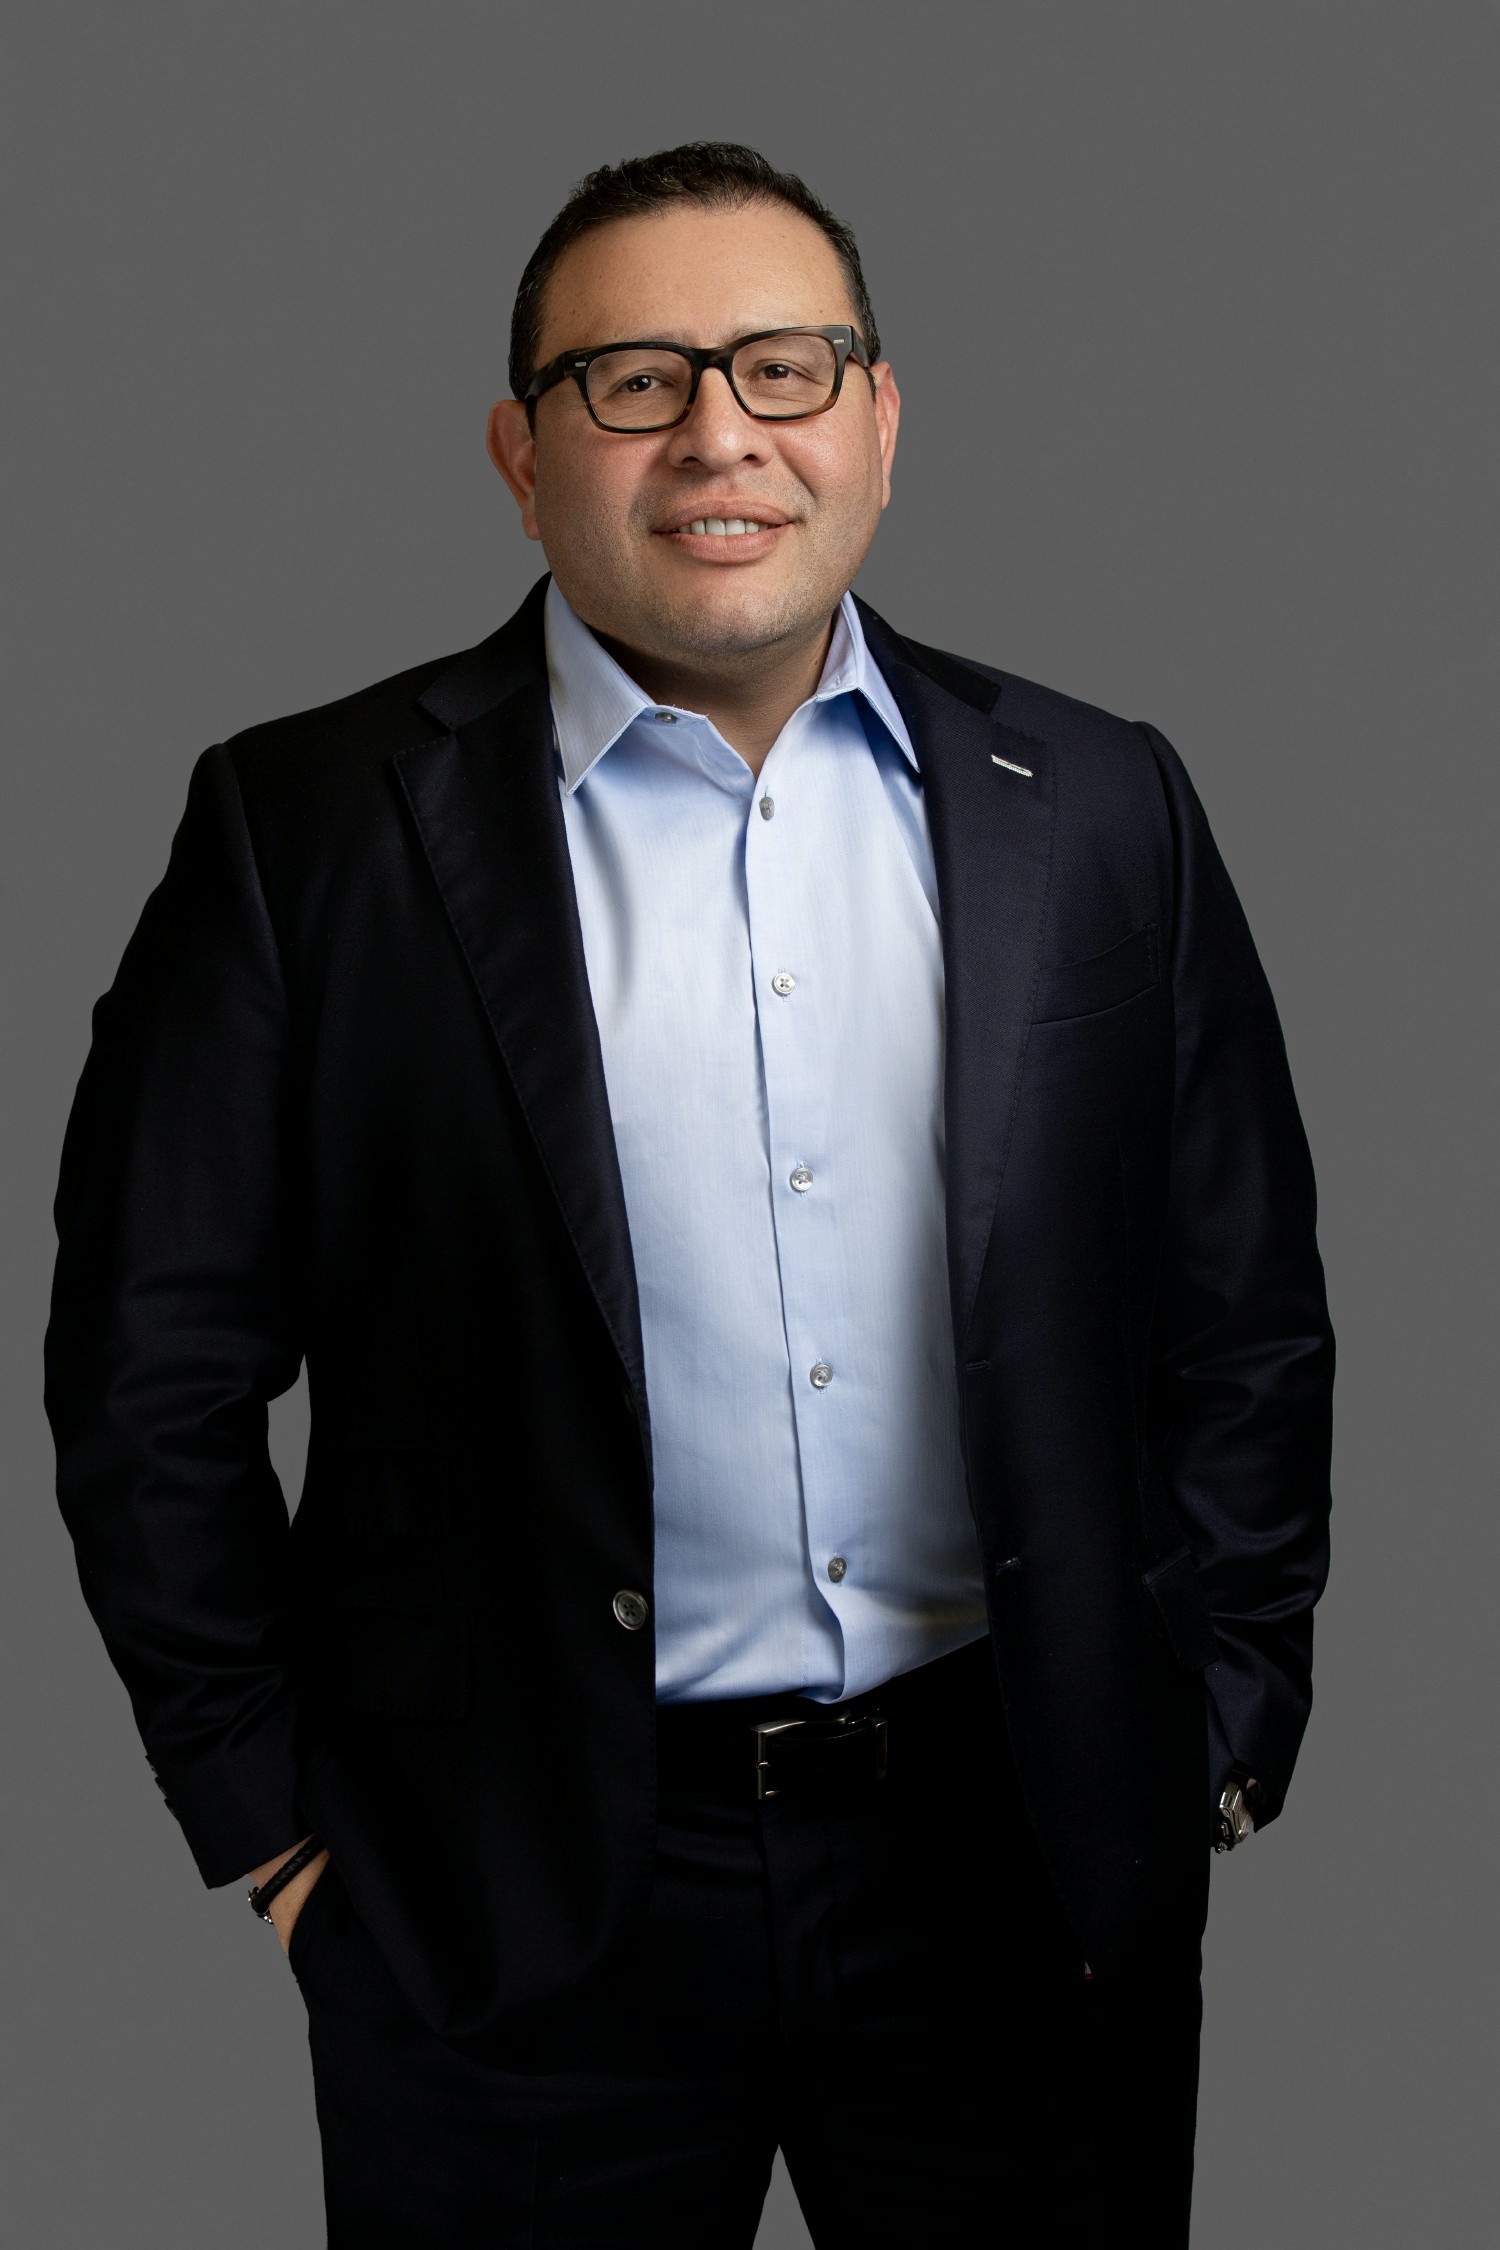 Gustavo Gamarra, President of GAMA-1 Technologies